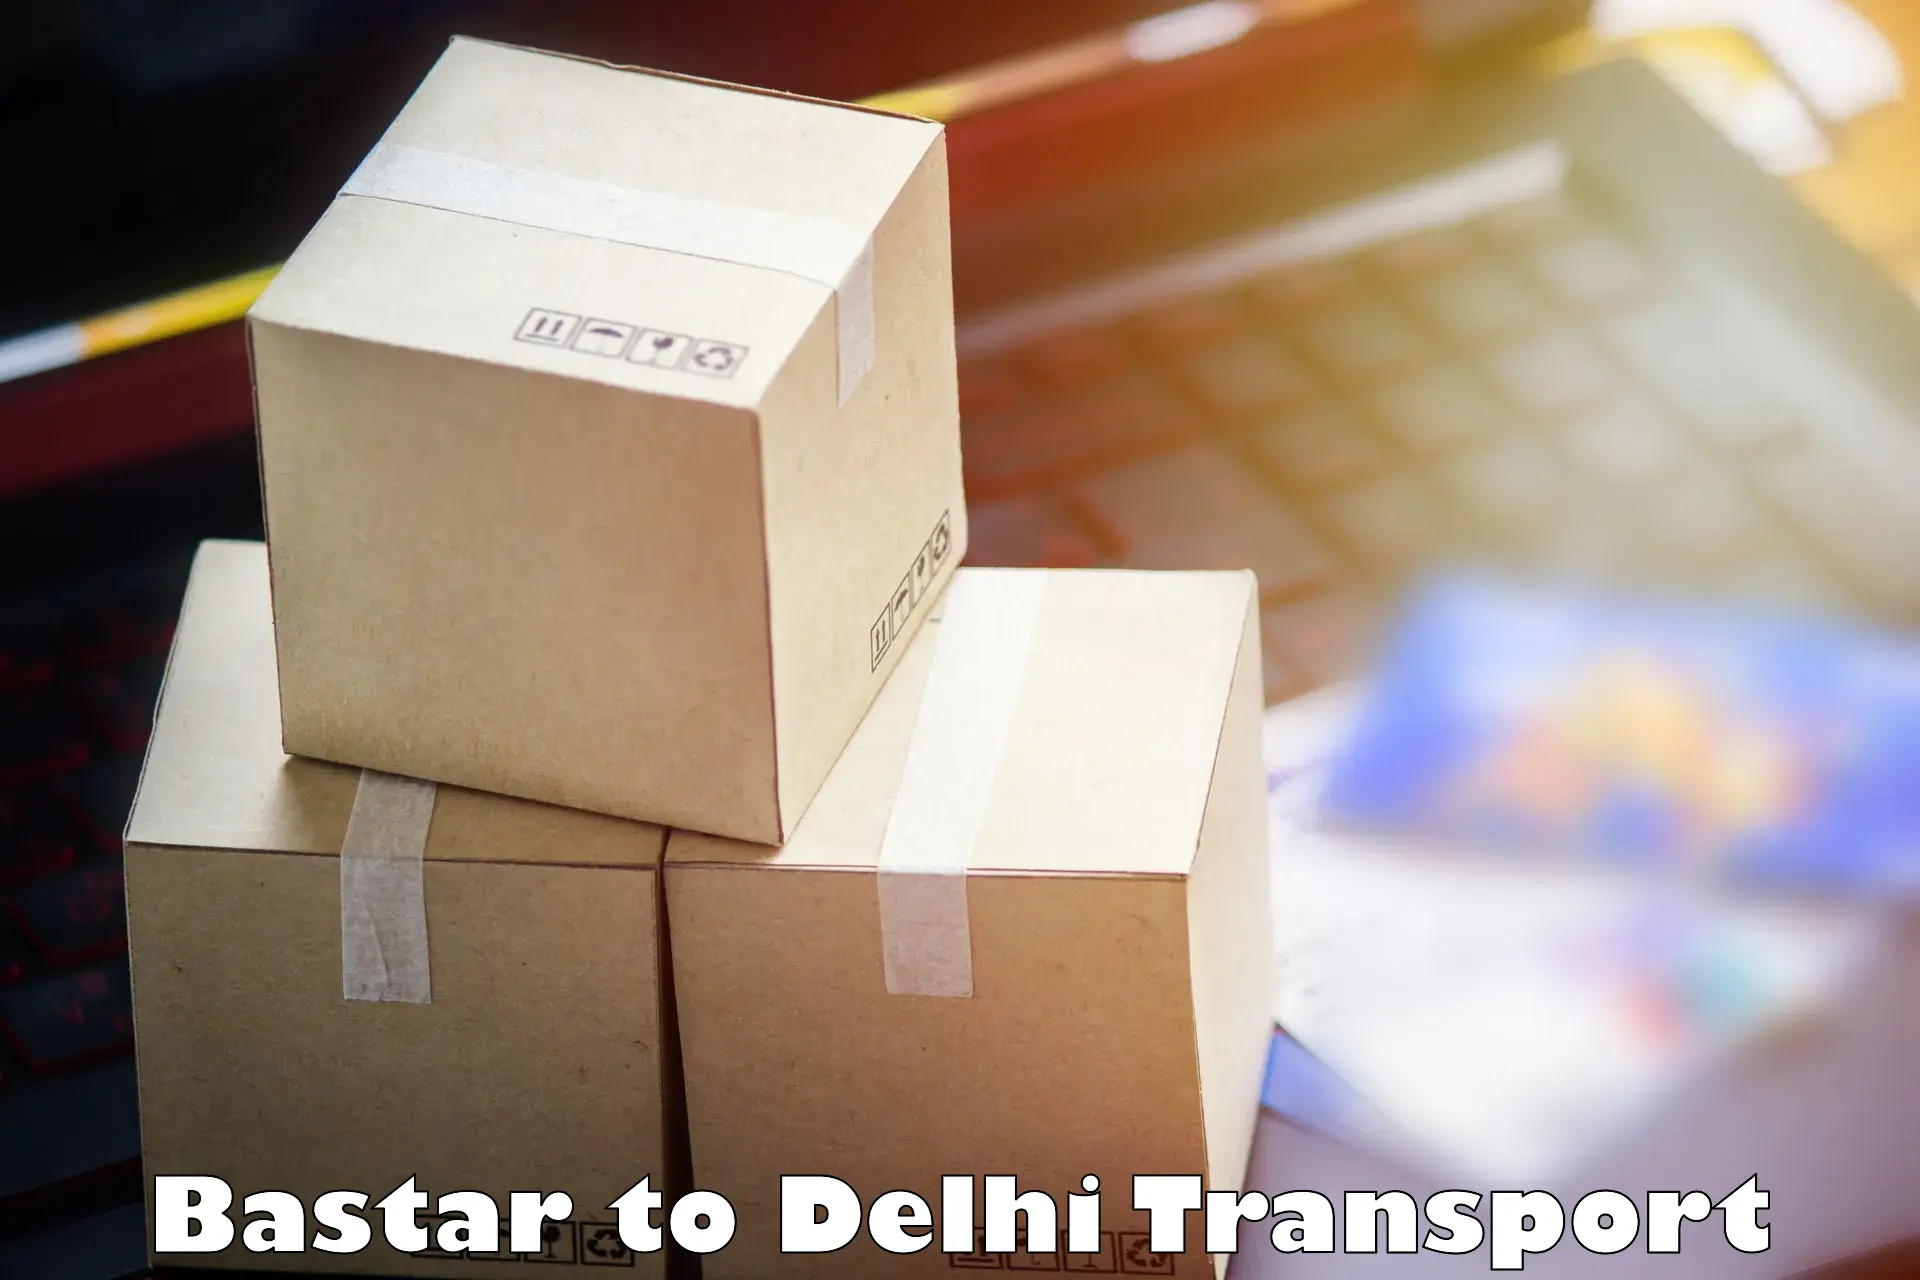 Daily transport service Bastar to NCR